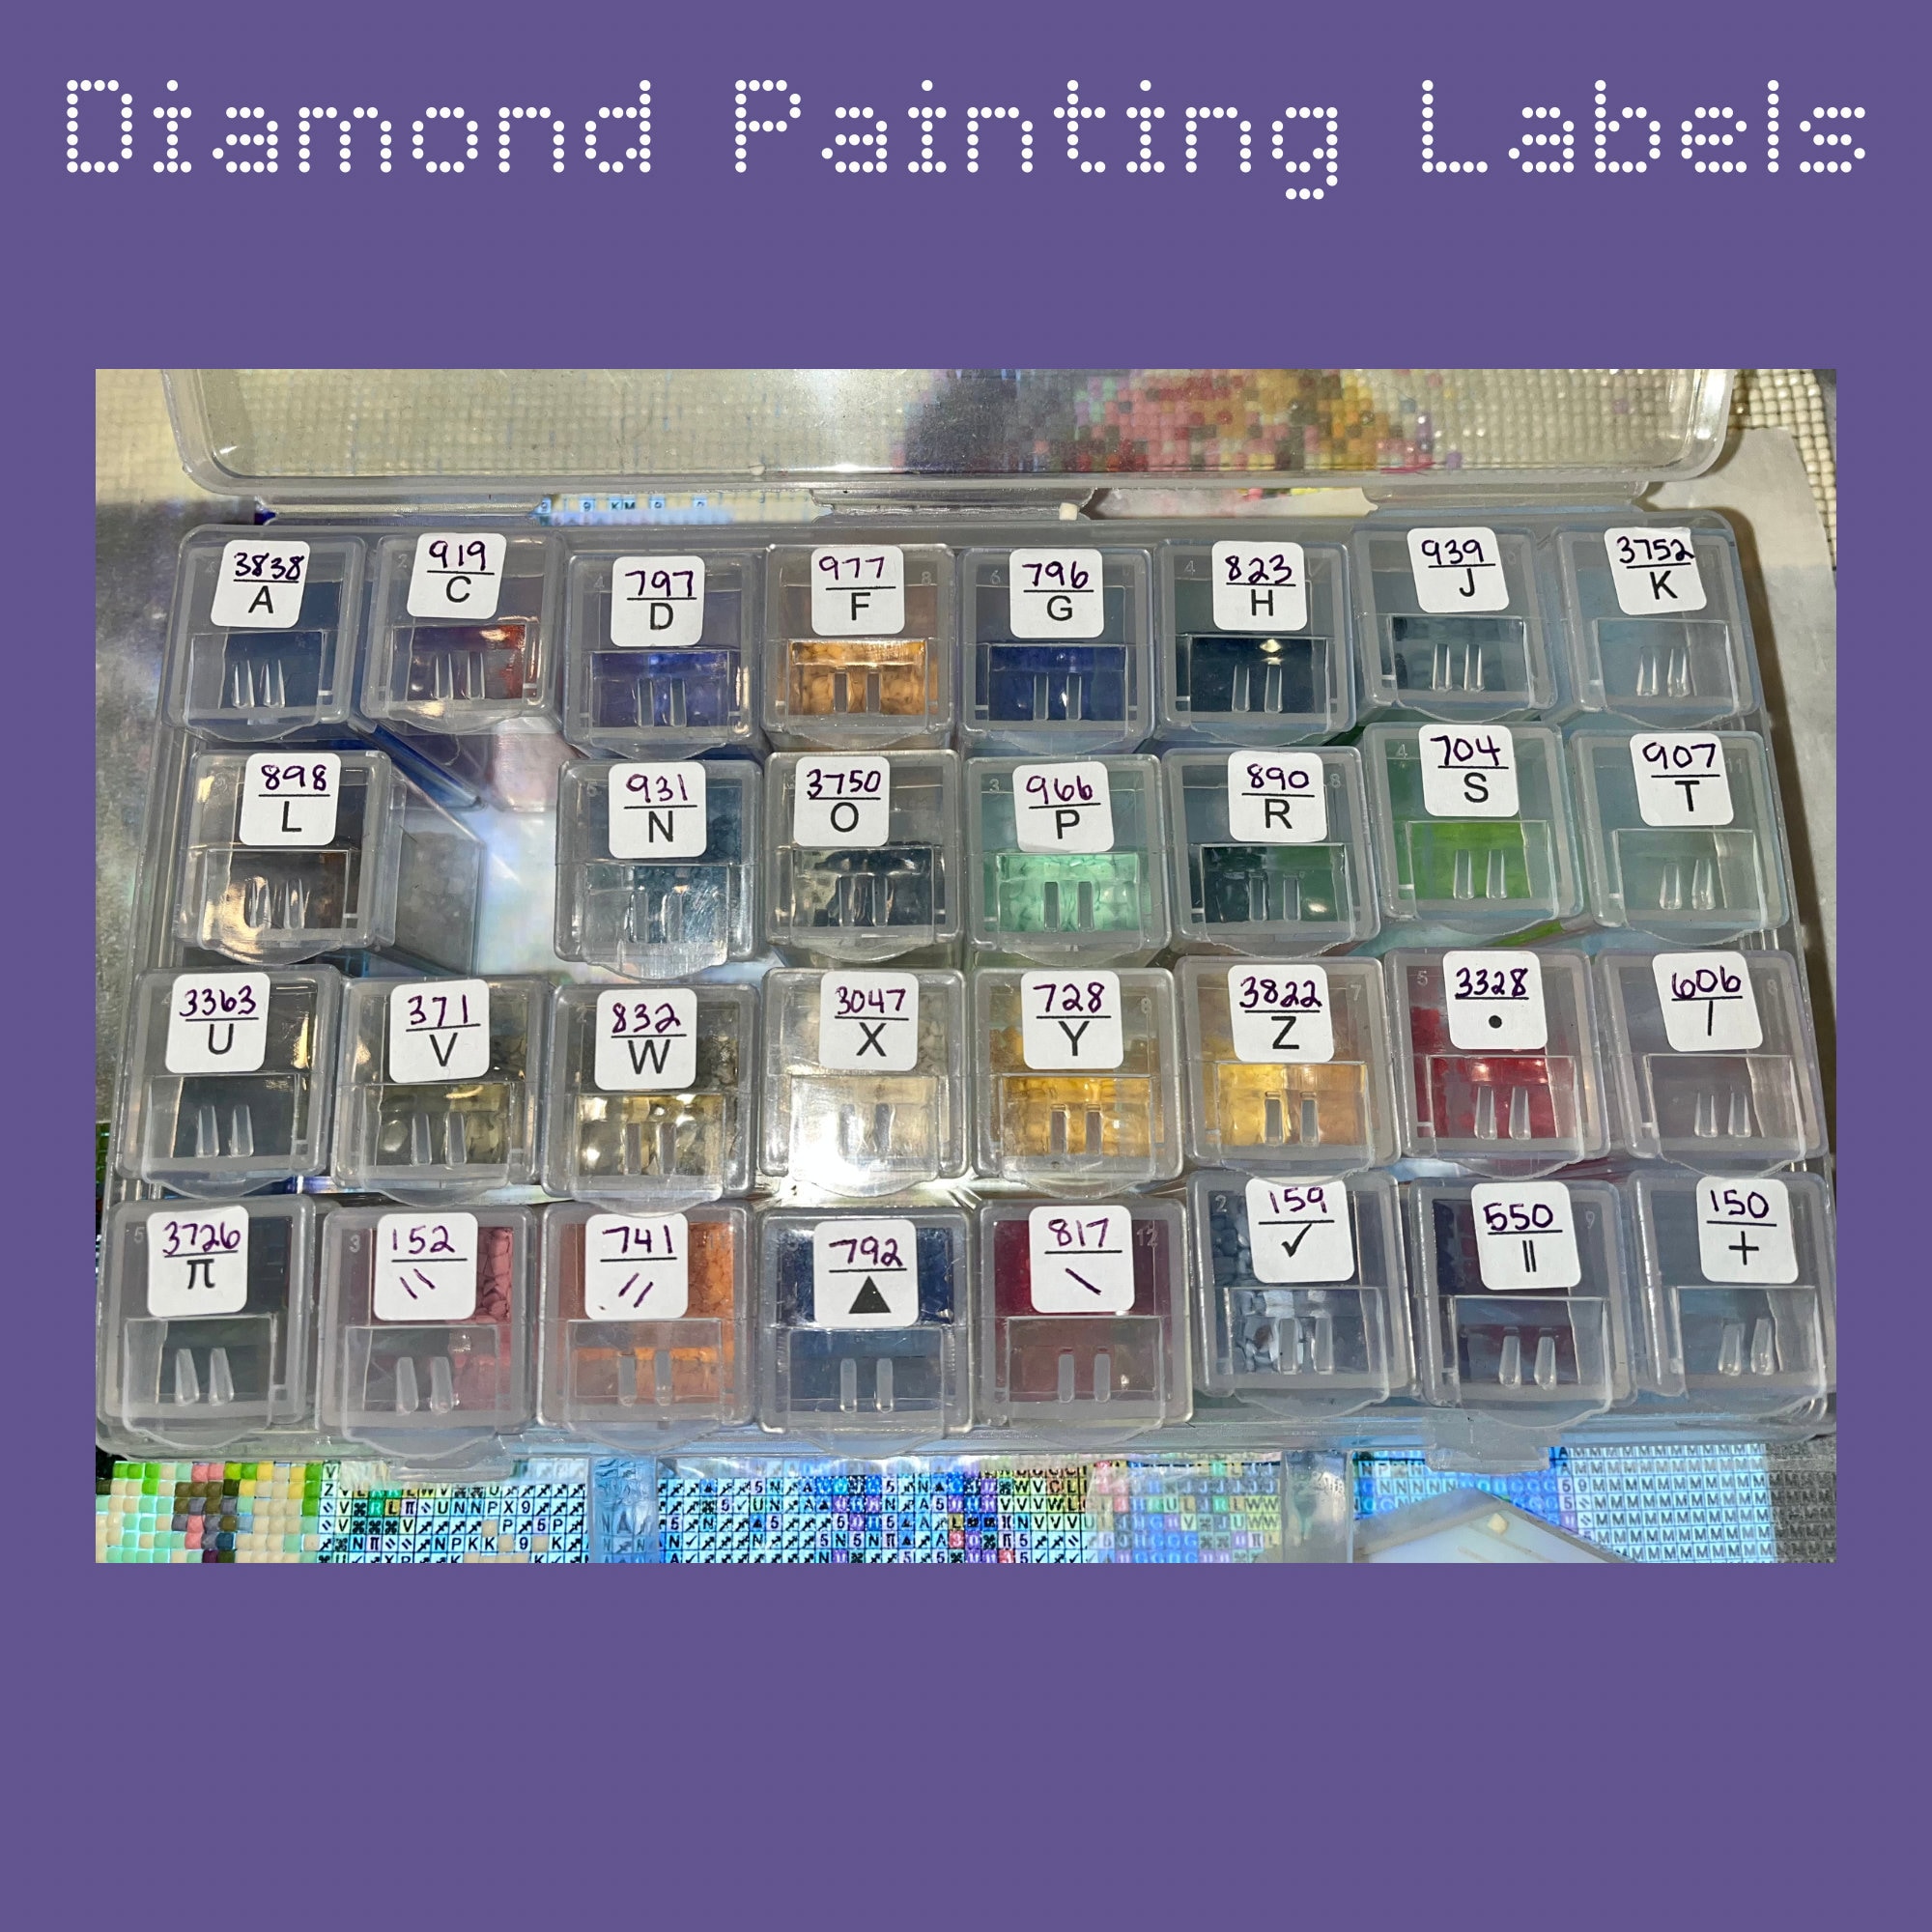 Diamond Painting Tools sets 5D Diamond Painting Accessories Kits Storage  Box Roller Point Sticker Drill Pen Set